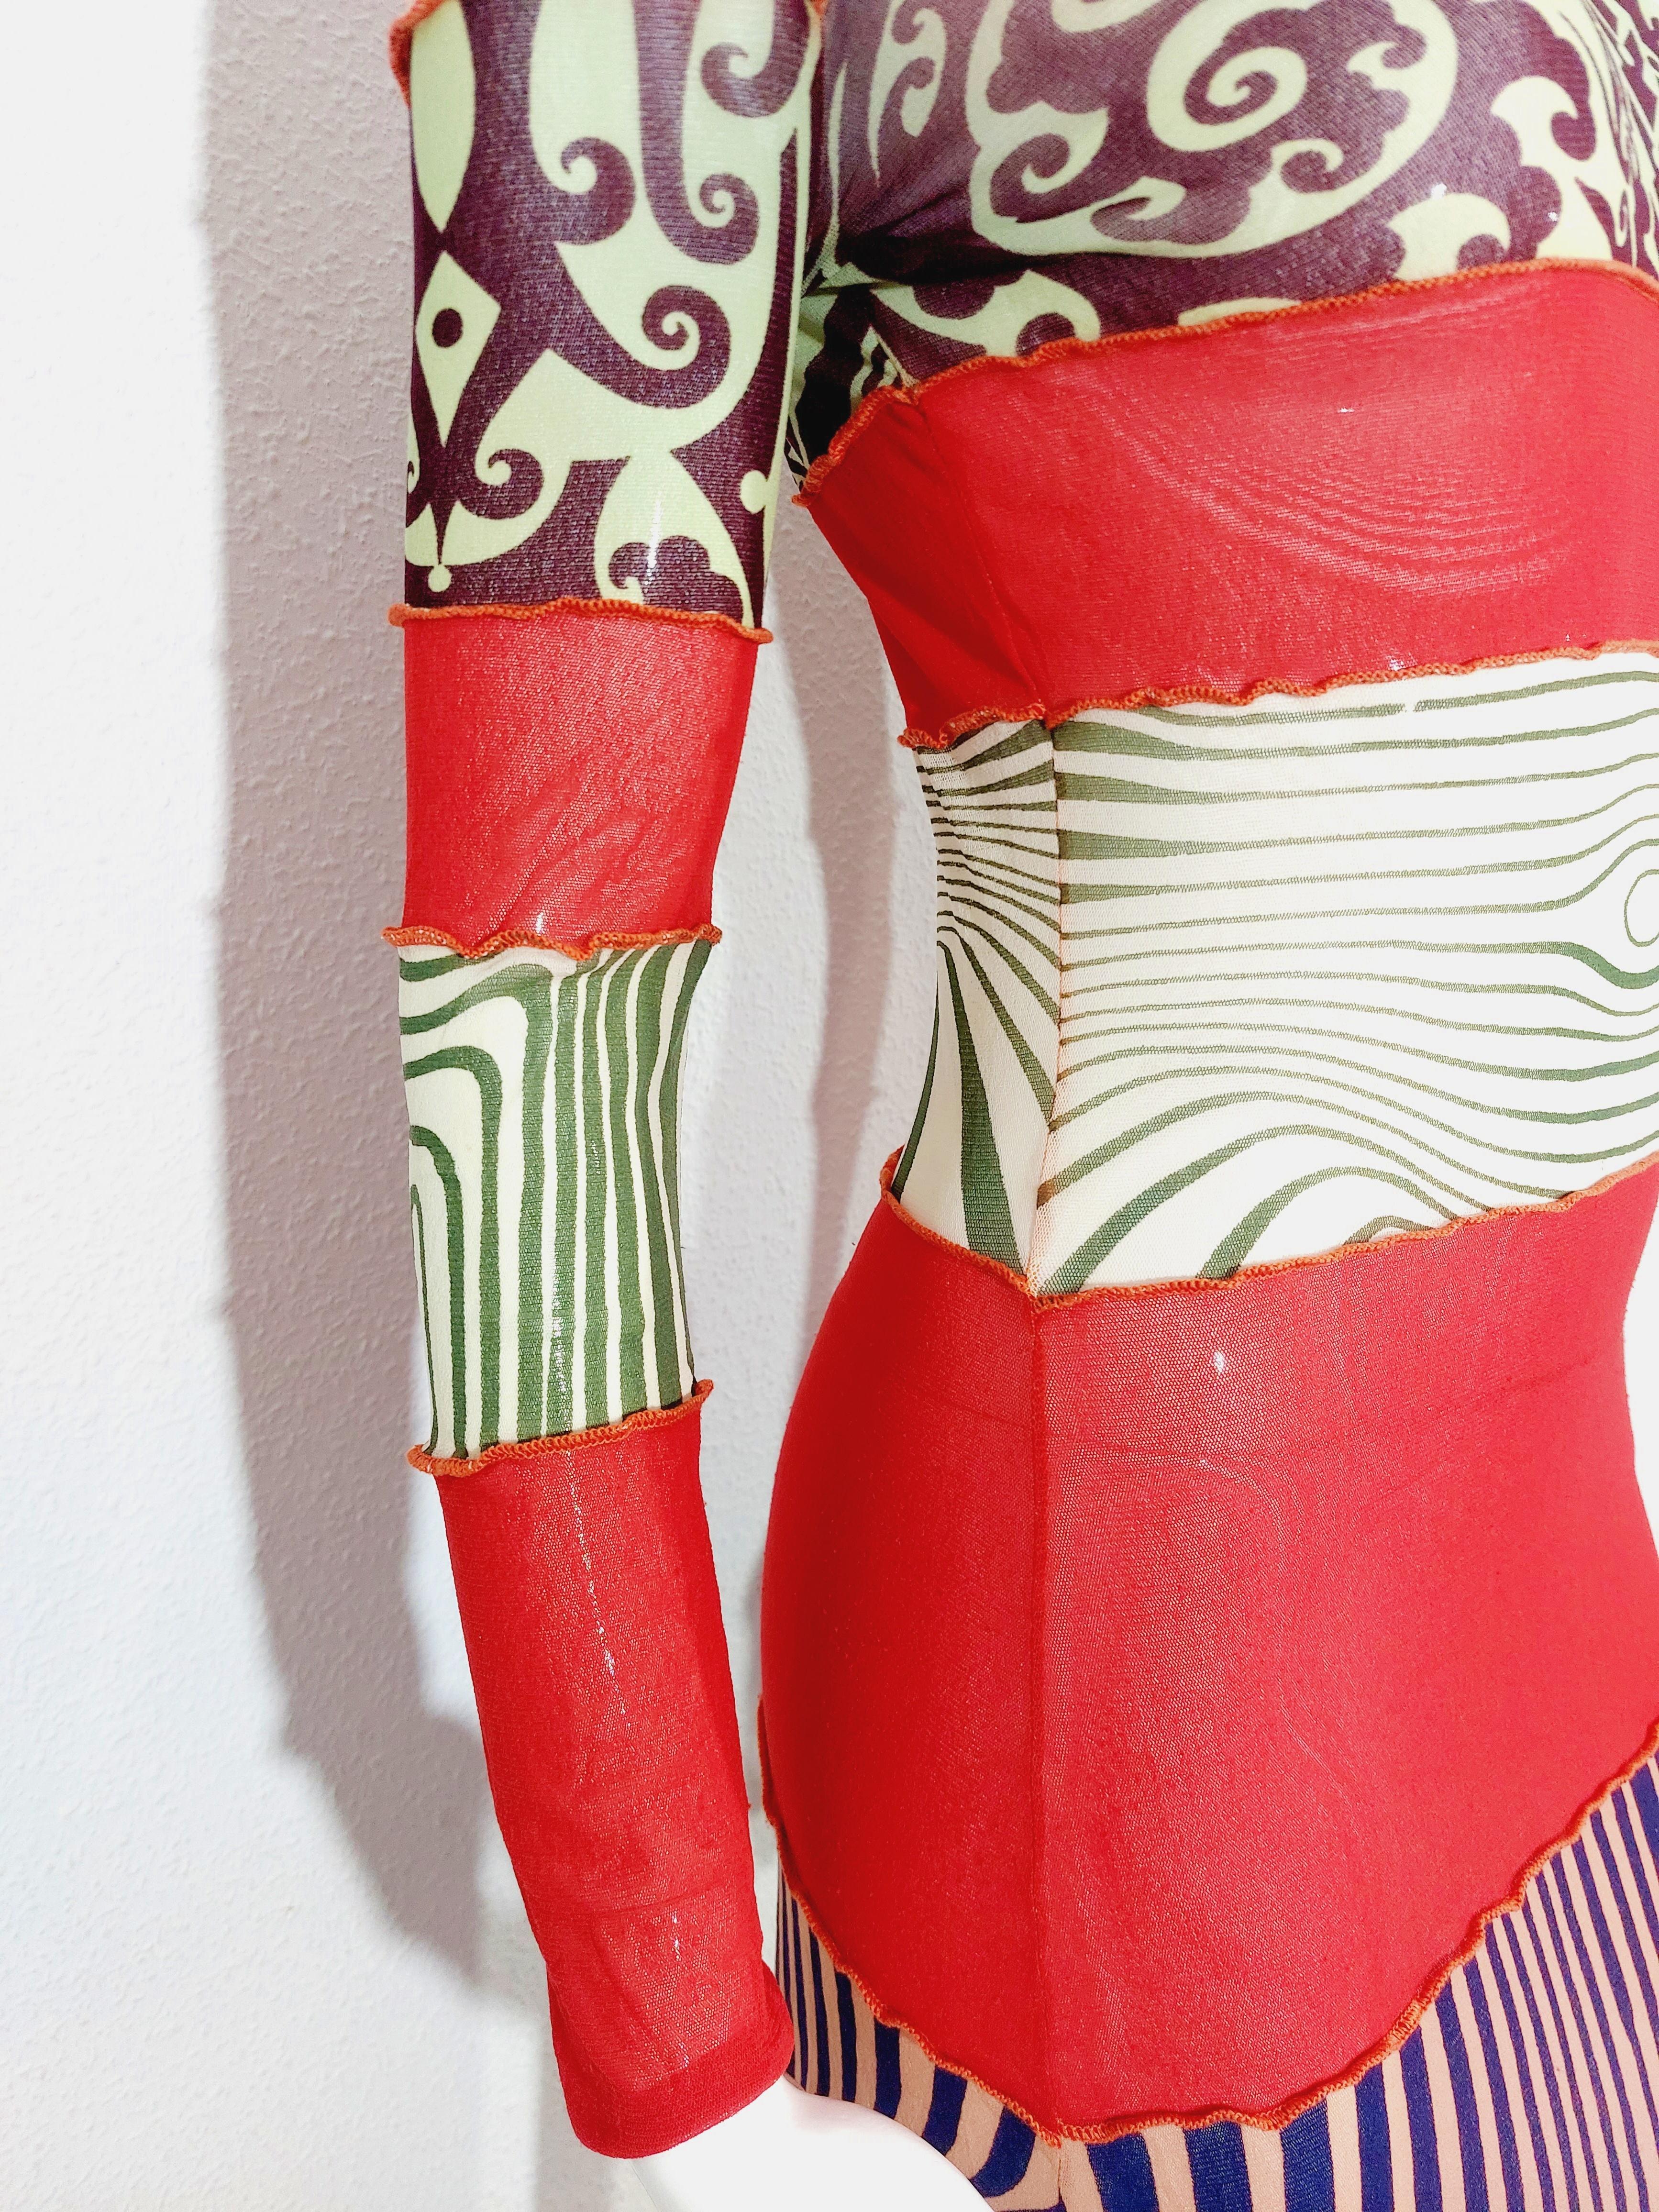 Jean Paul Gaultier Optical Illusion Nude Ethic Trompe l'oeil Vanessa Guide Dress For Sale 1